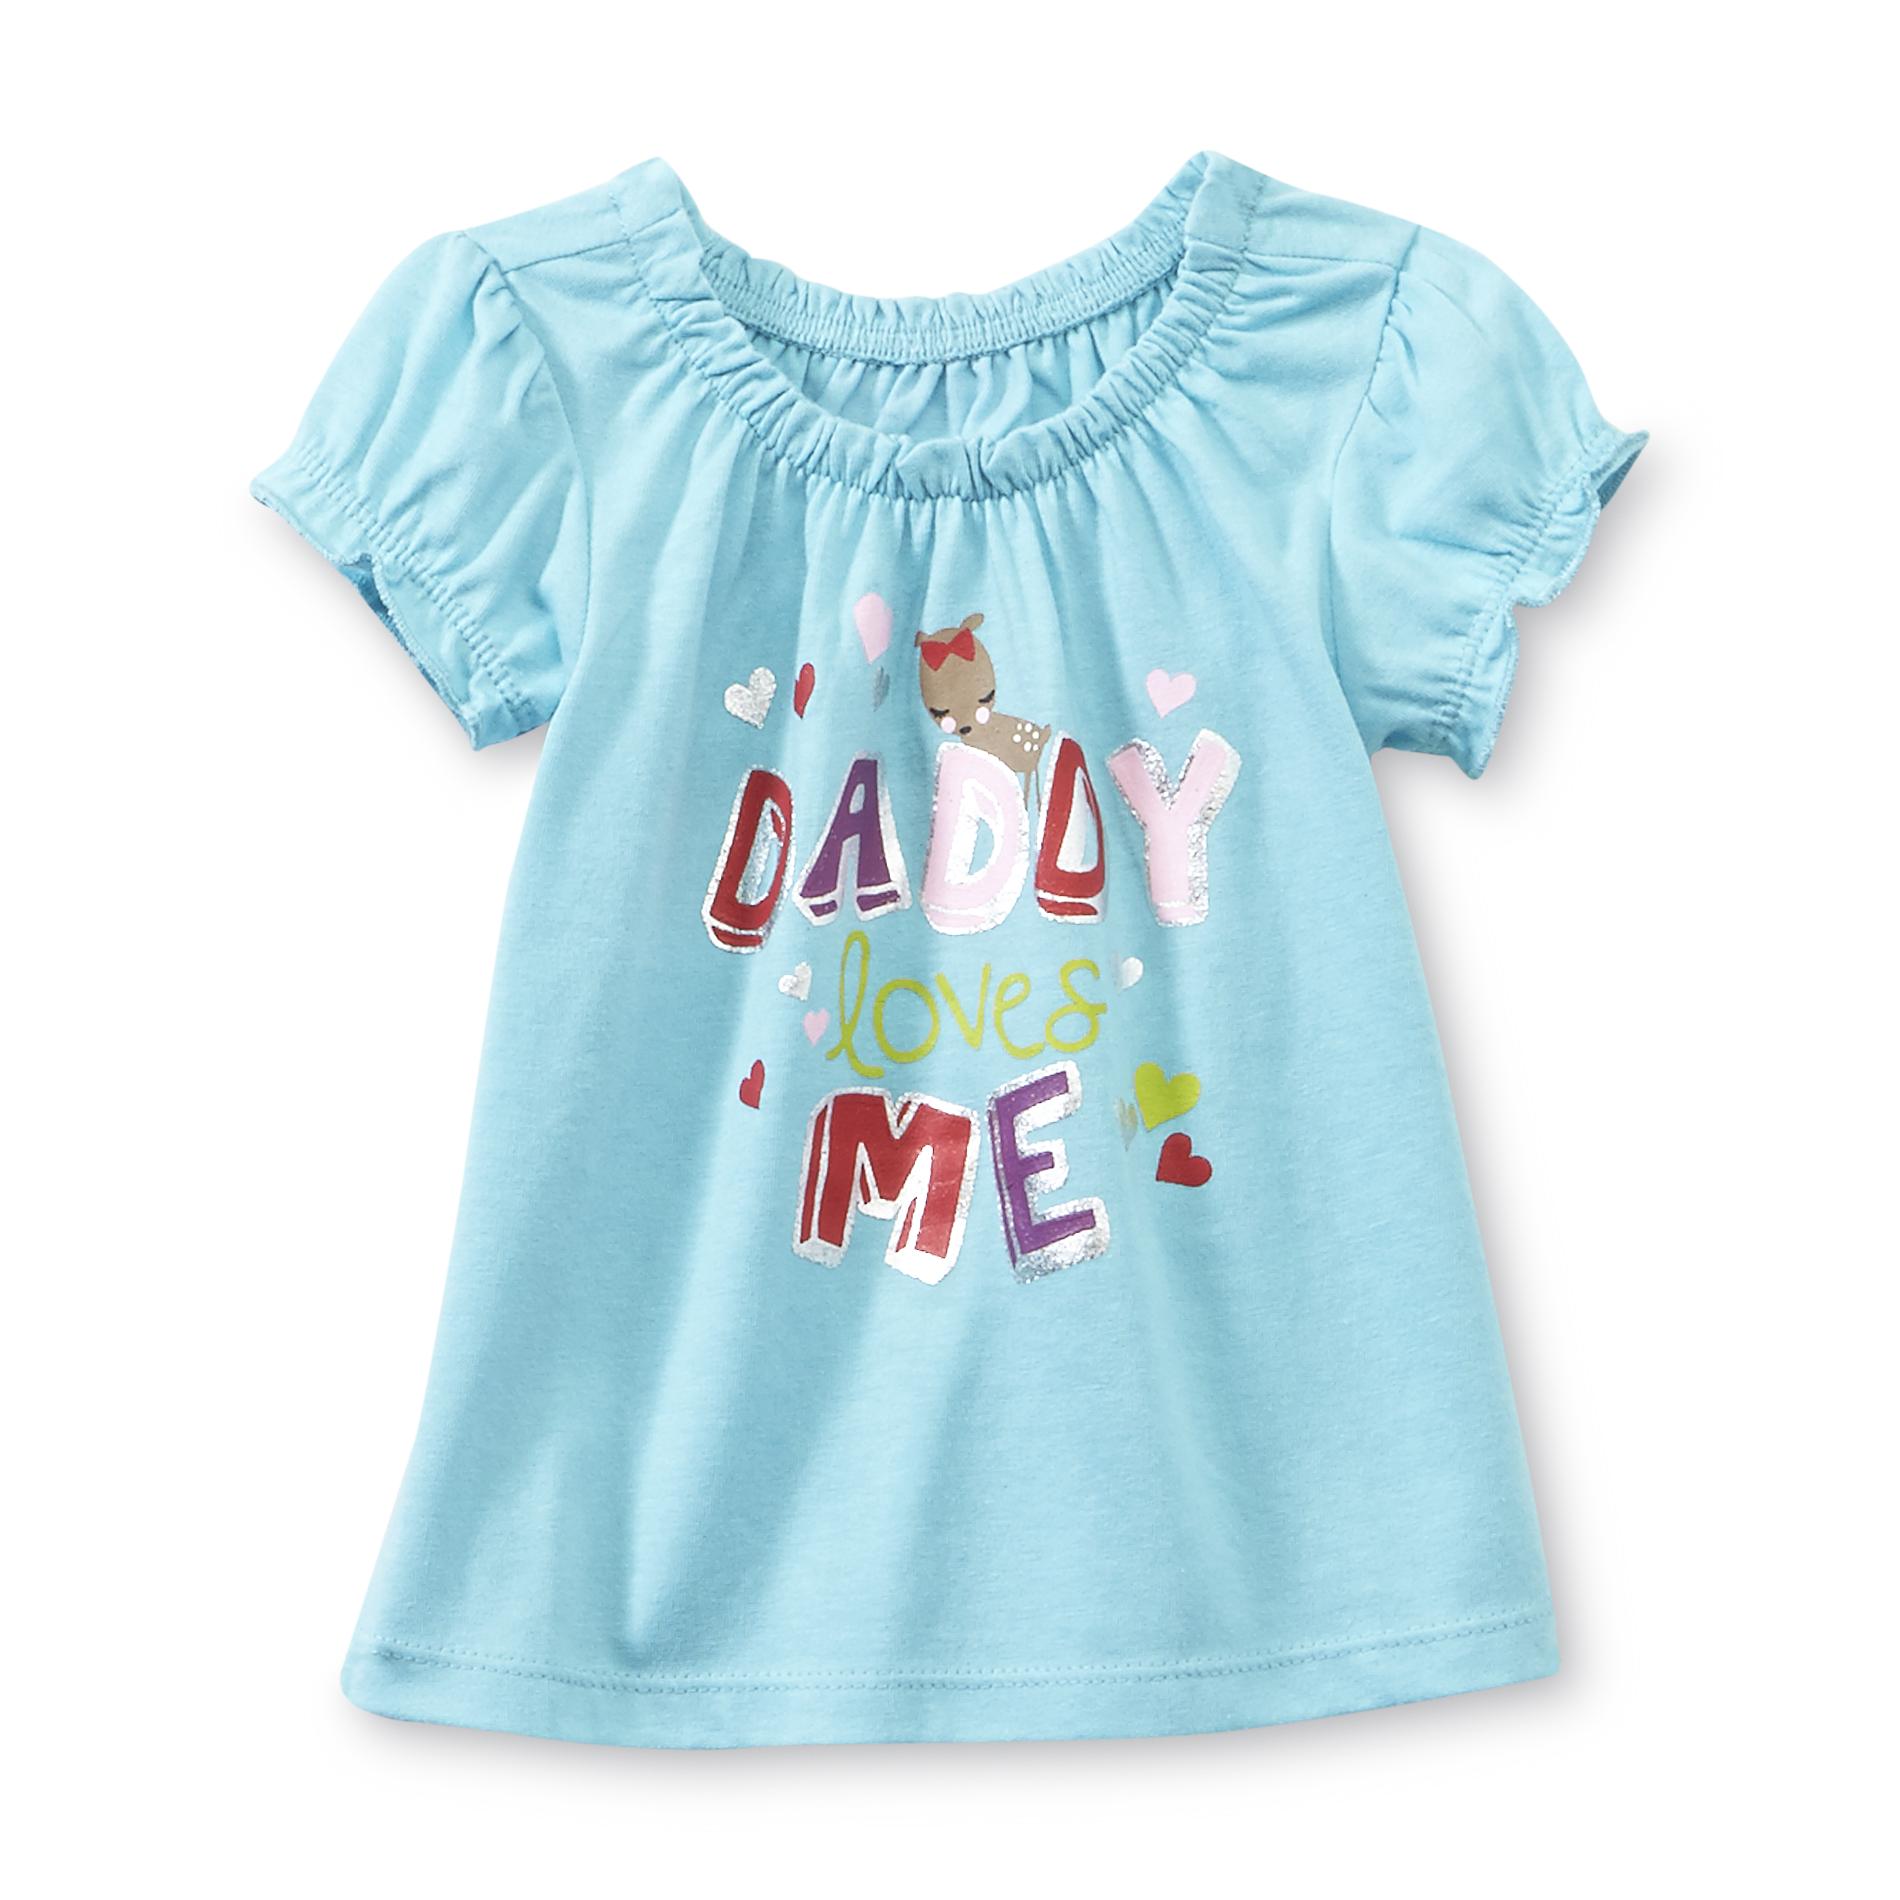 WonderKids Infant & Toddler Girl's Short-Sleeve Top - Deer